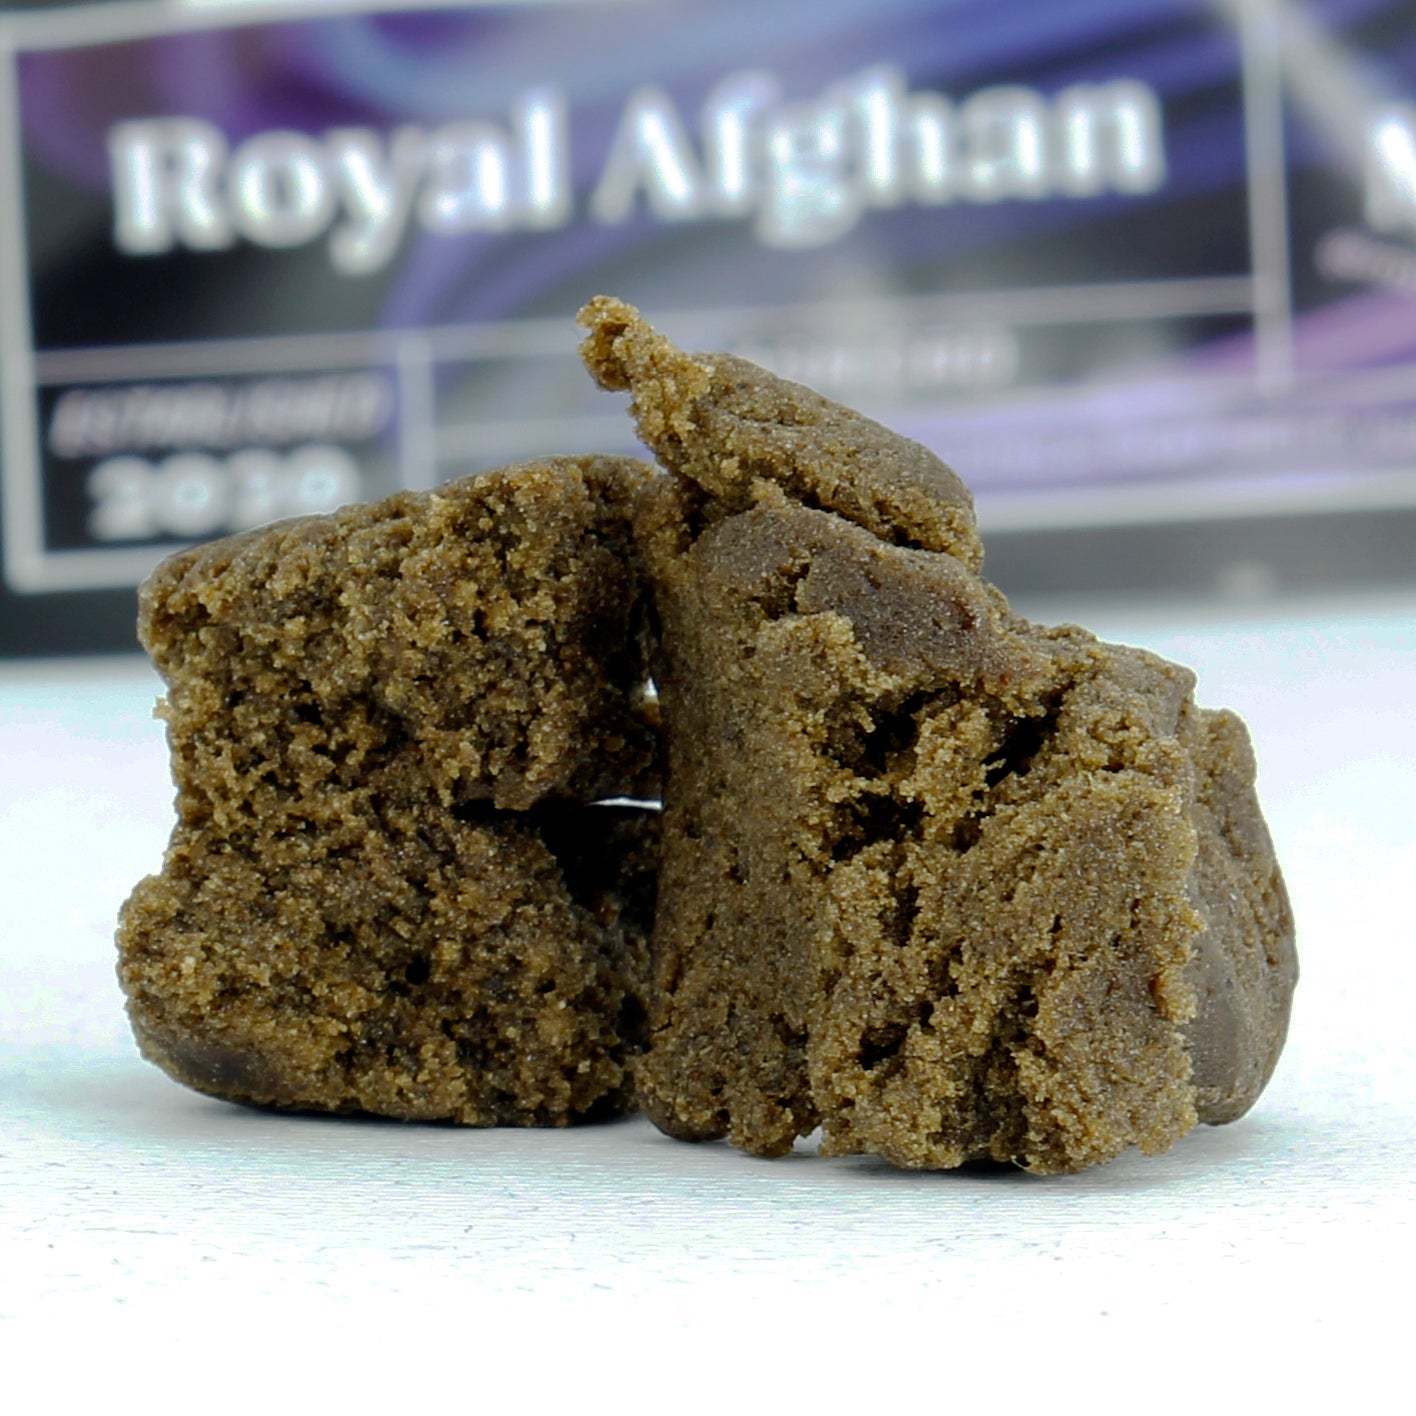 Royal Afghan